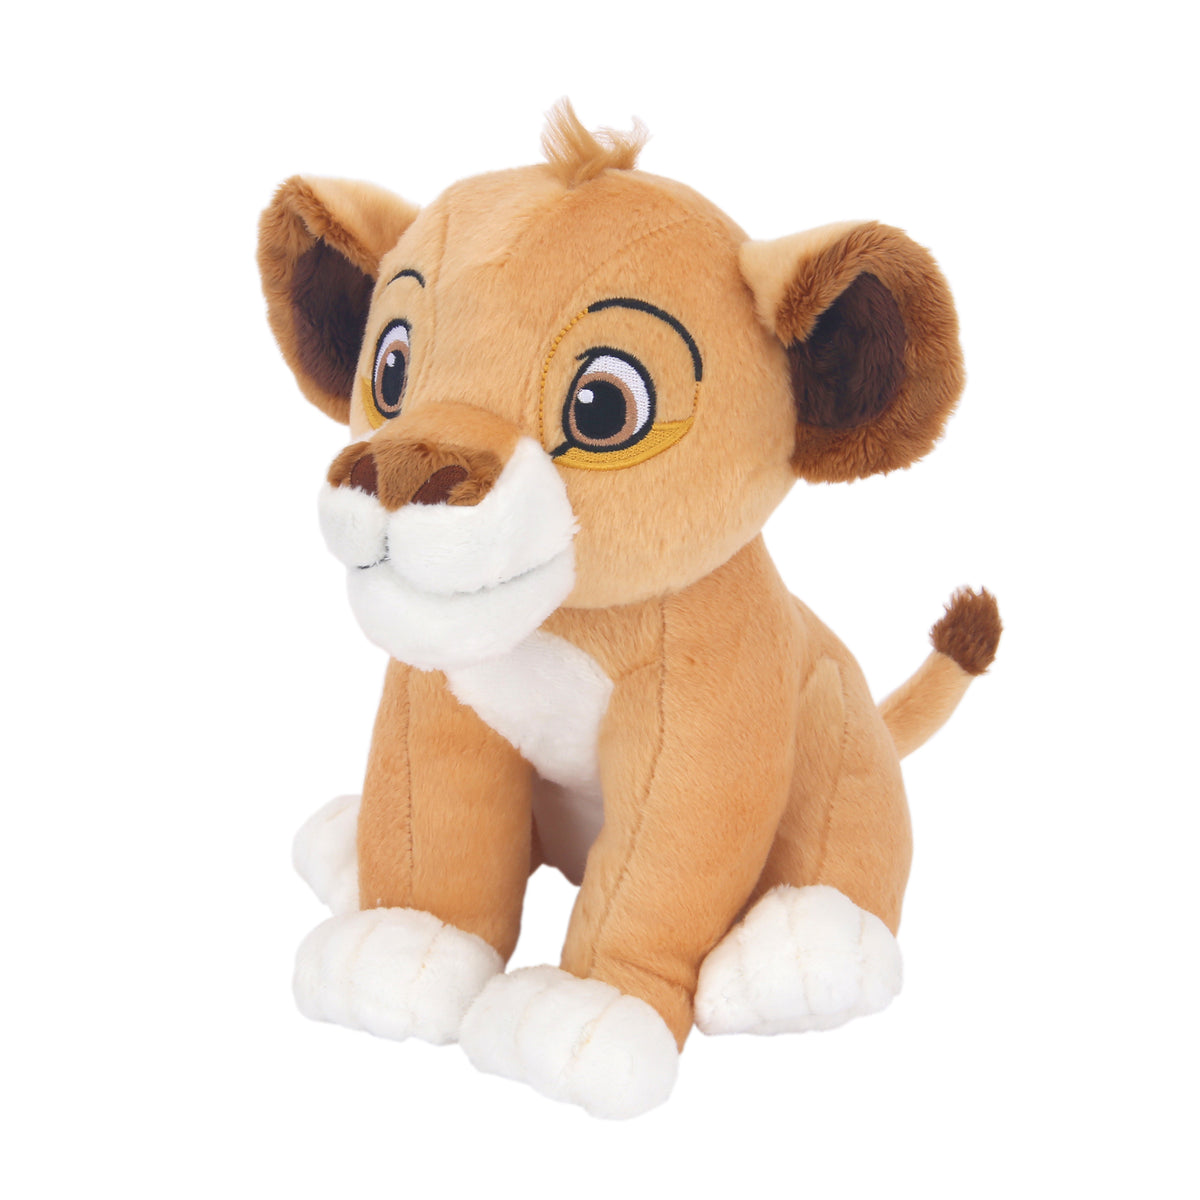 Disney Baby THE LION KING Plush Stuffed Animal Toy - Simba